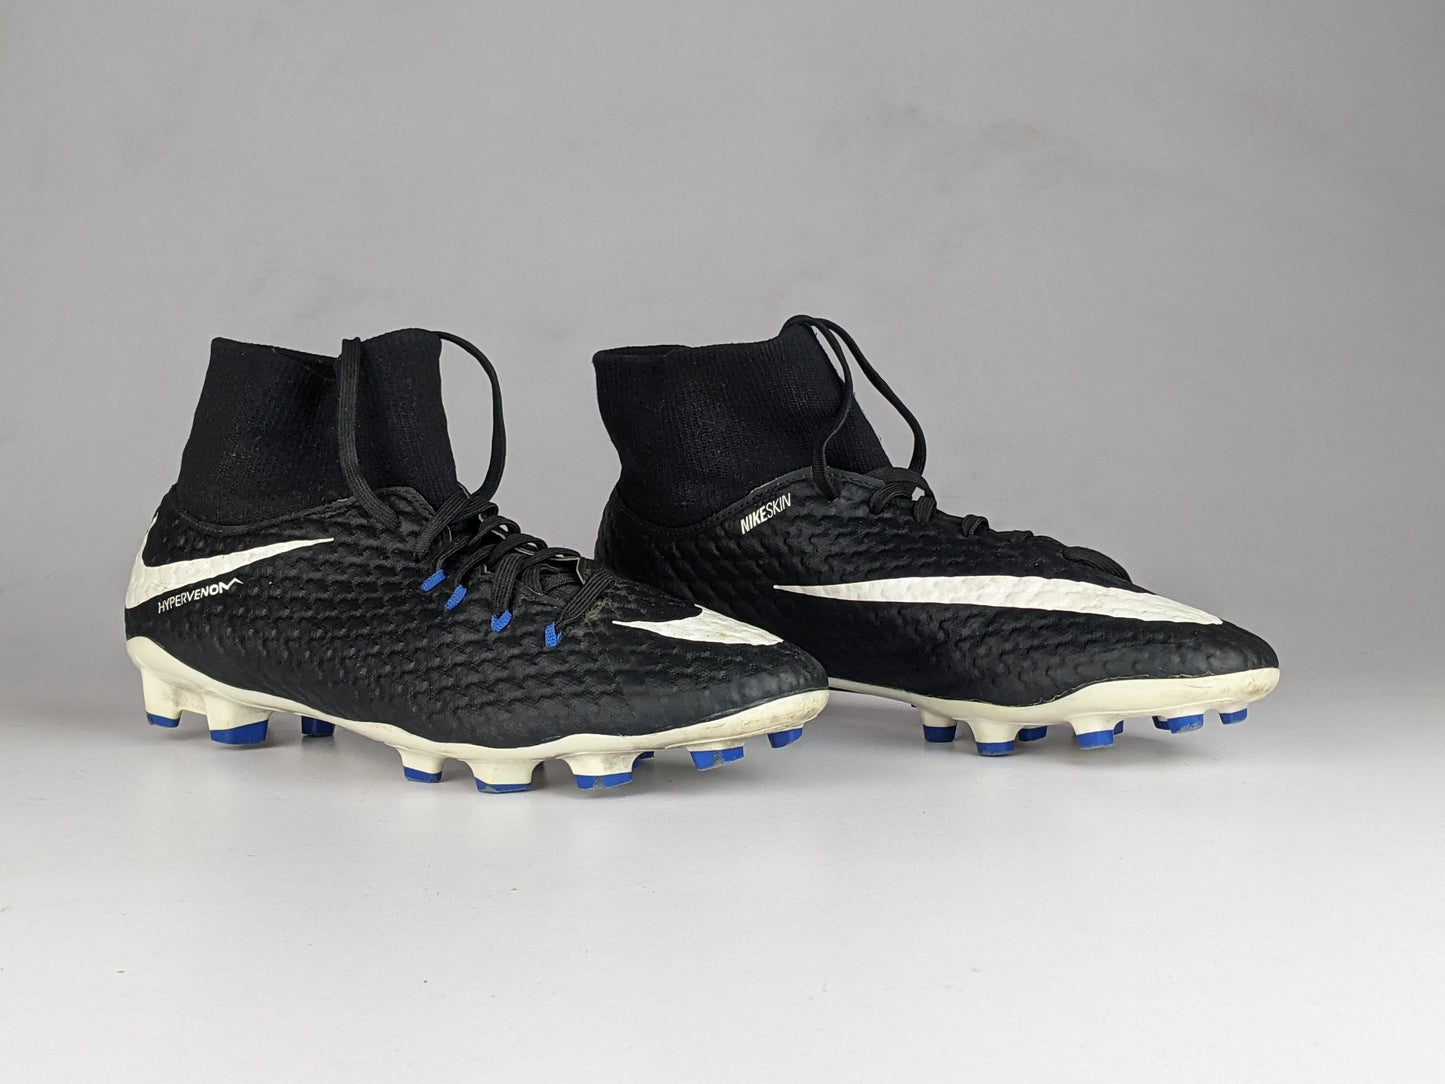 Nike Hypervenom Phelon 3 DF FG 'Black/White/Blue